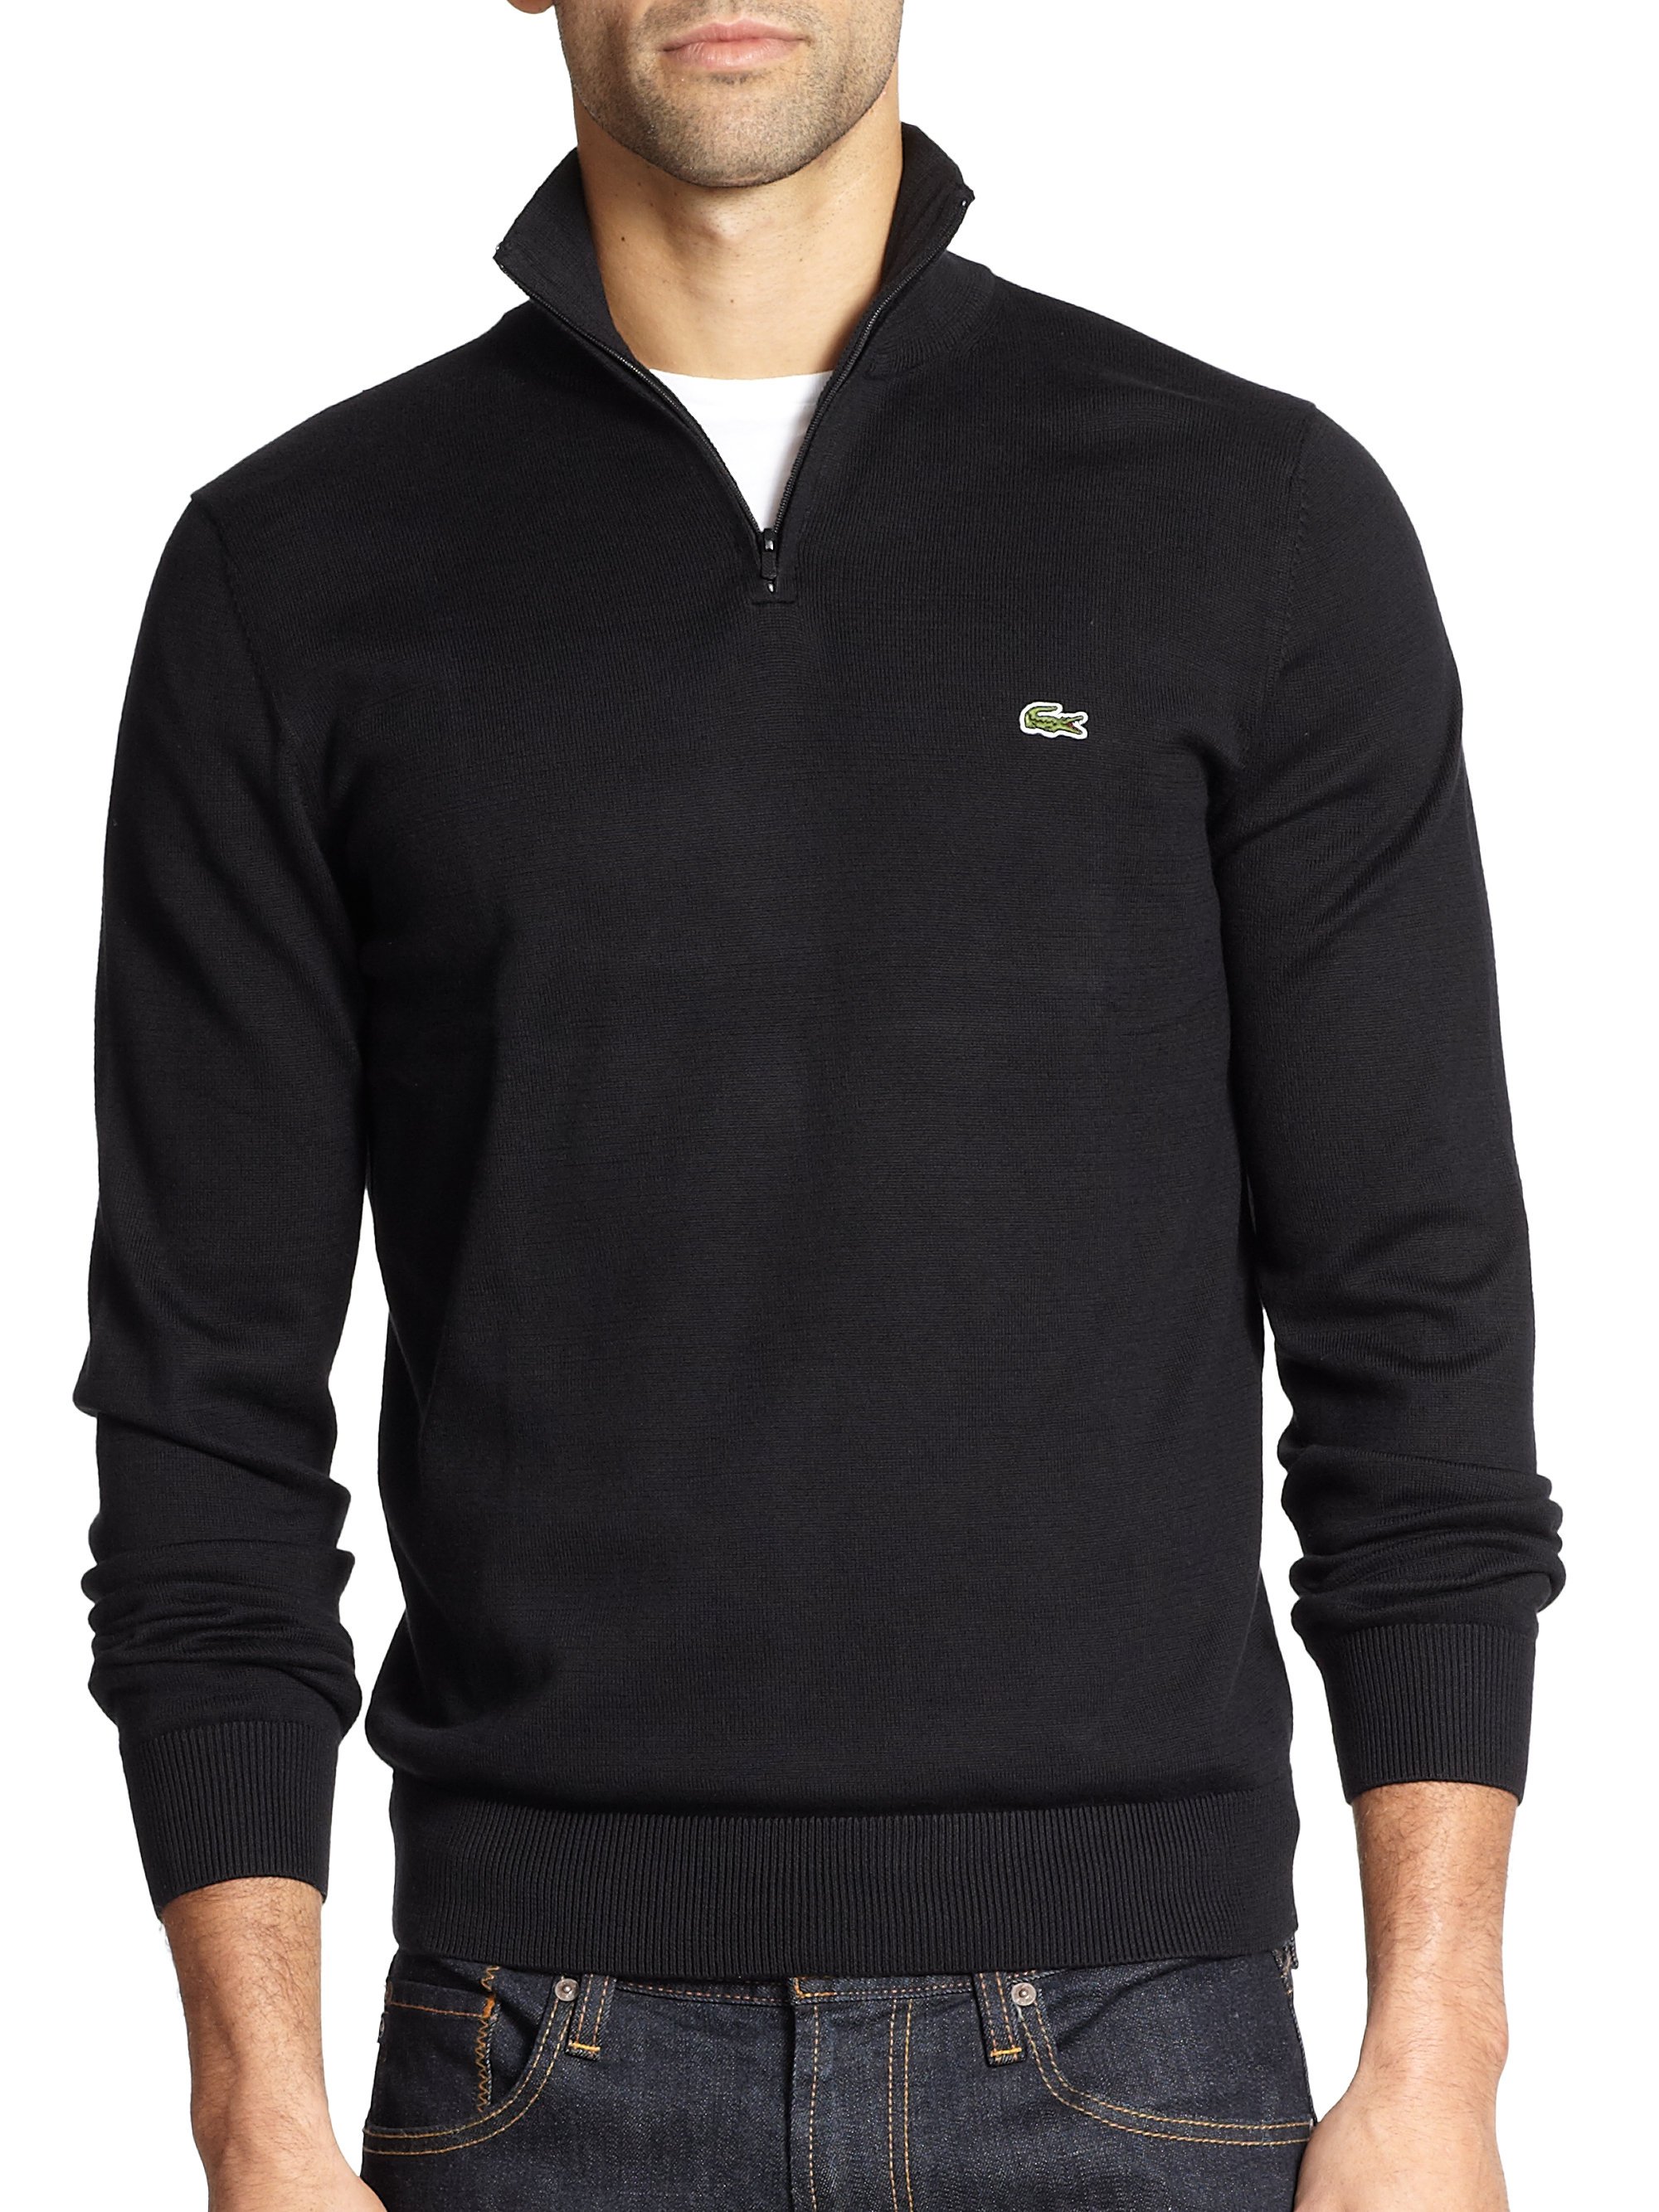 Lyst - Lacoste Half-zip Pullover Sweater in Black for Men